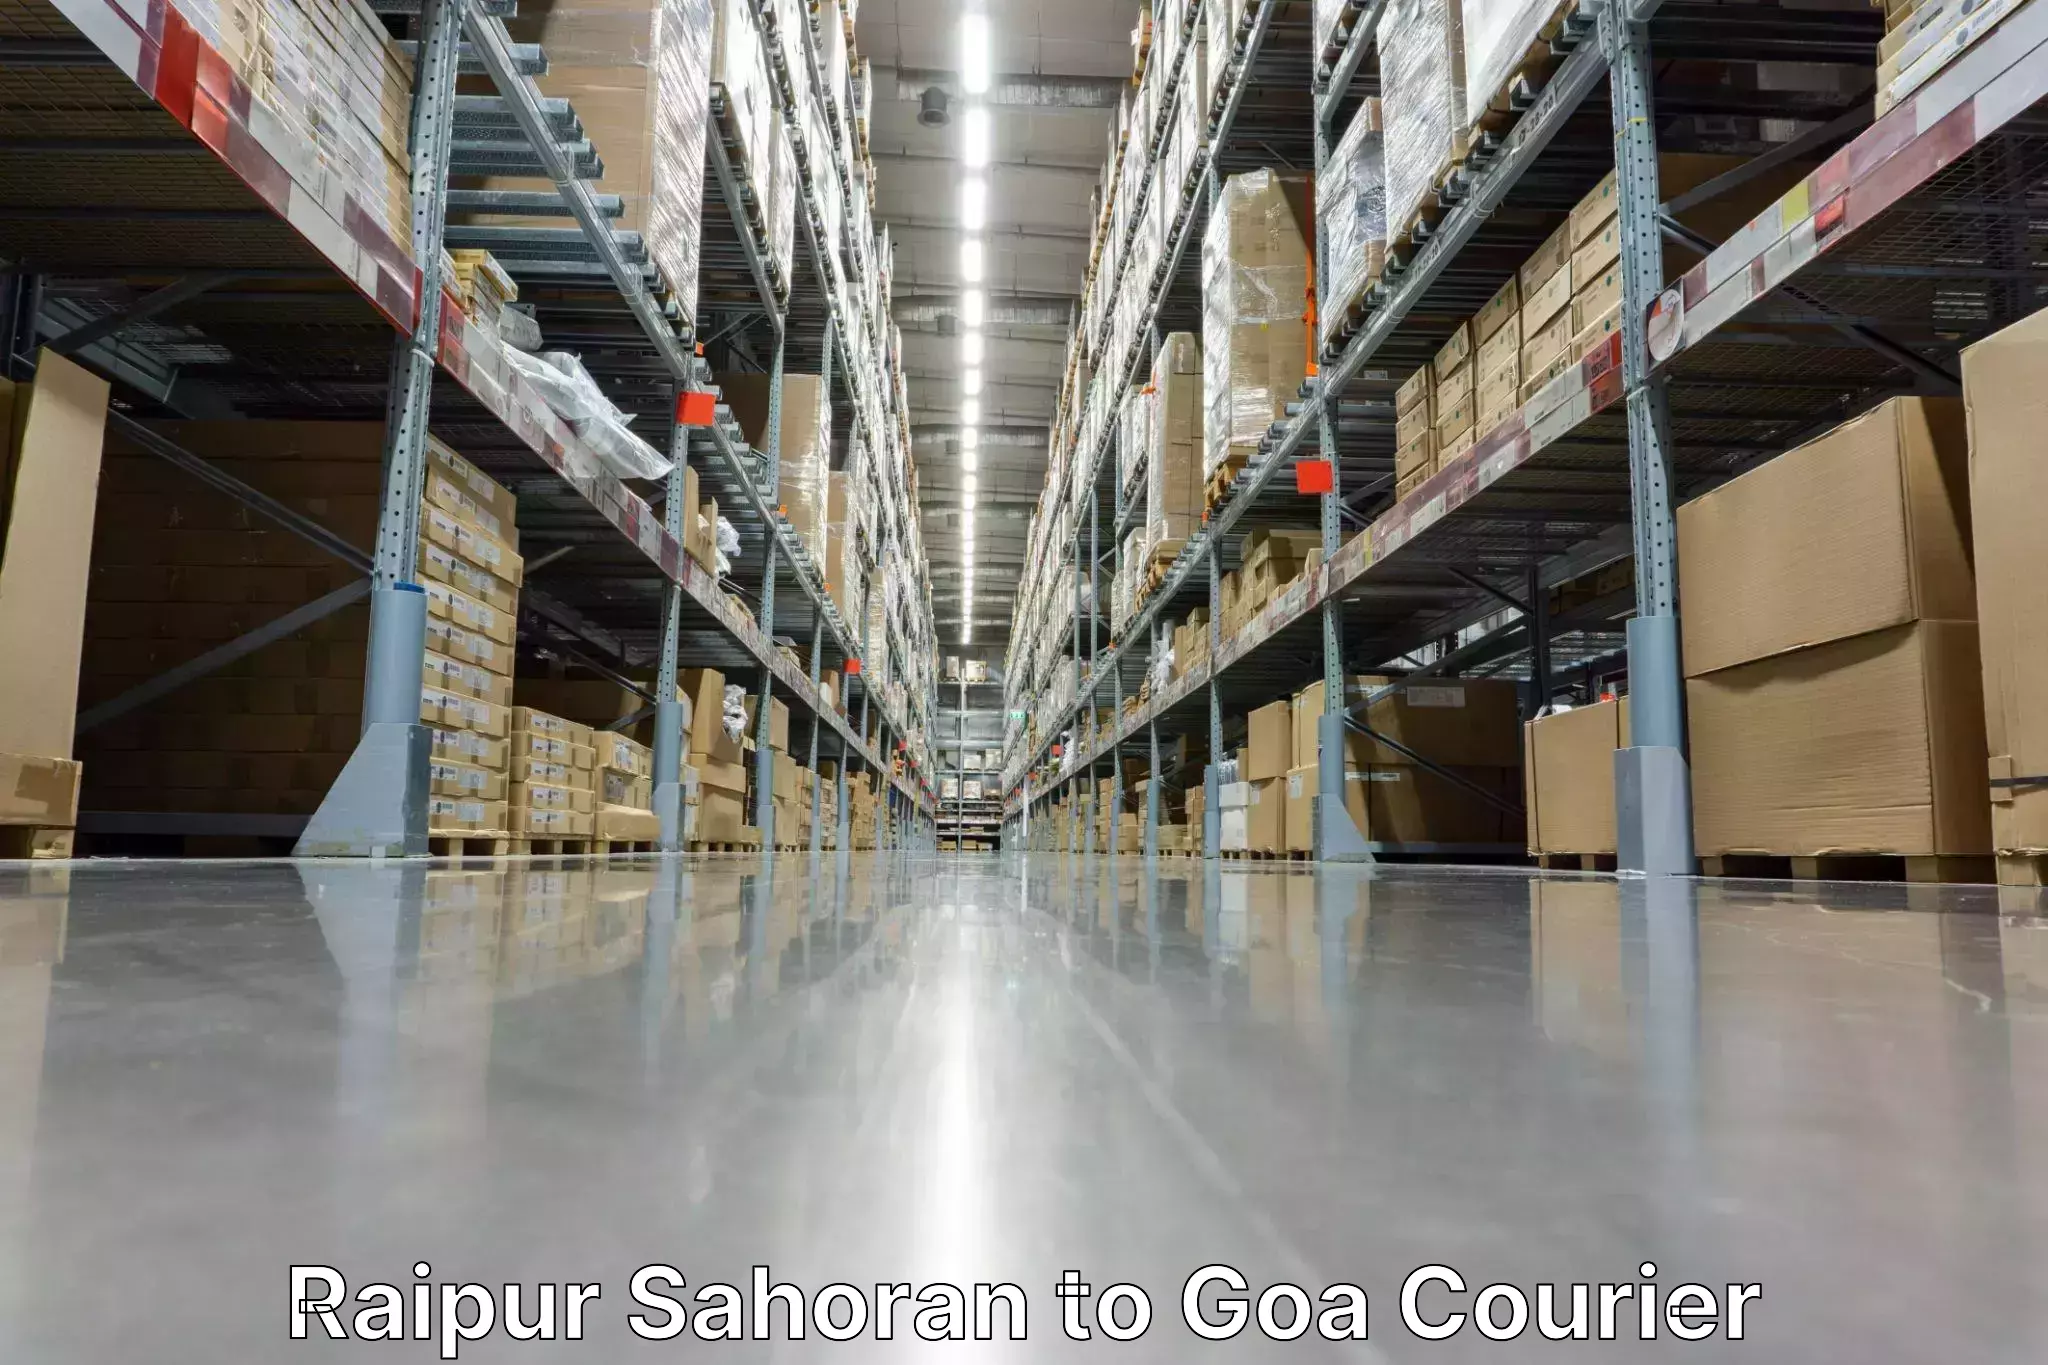 Courier service efficiency Raipur Sahoran to Panaji